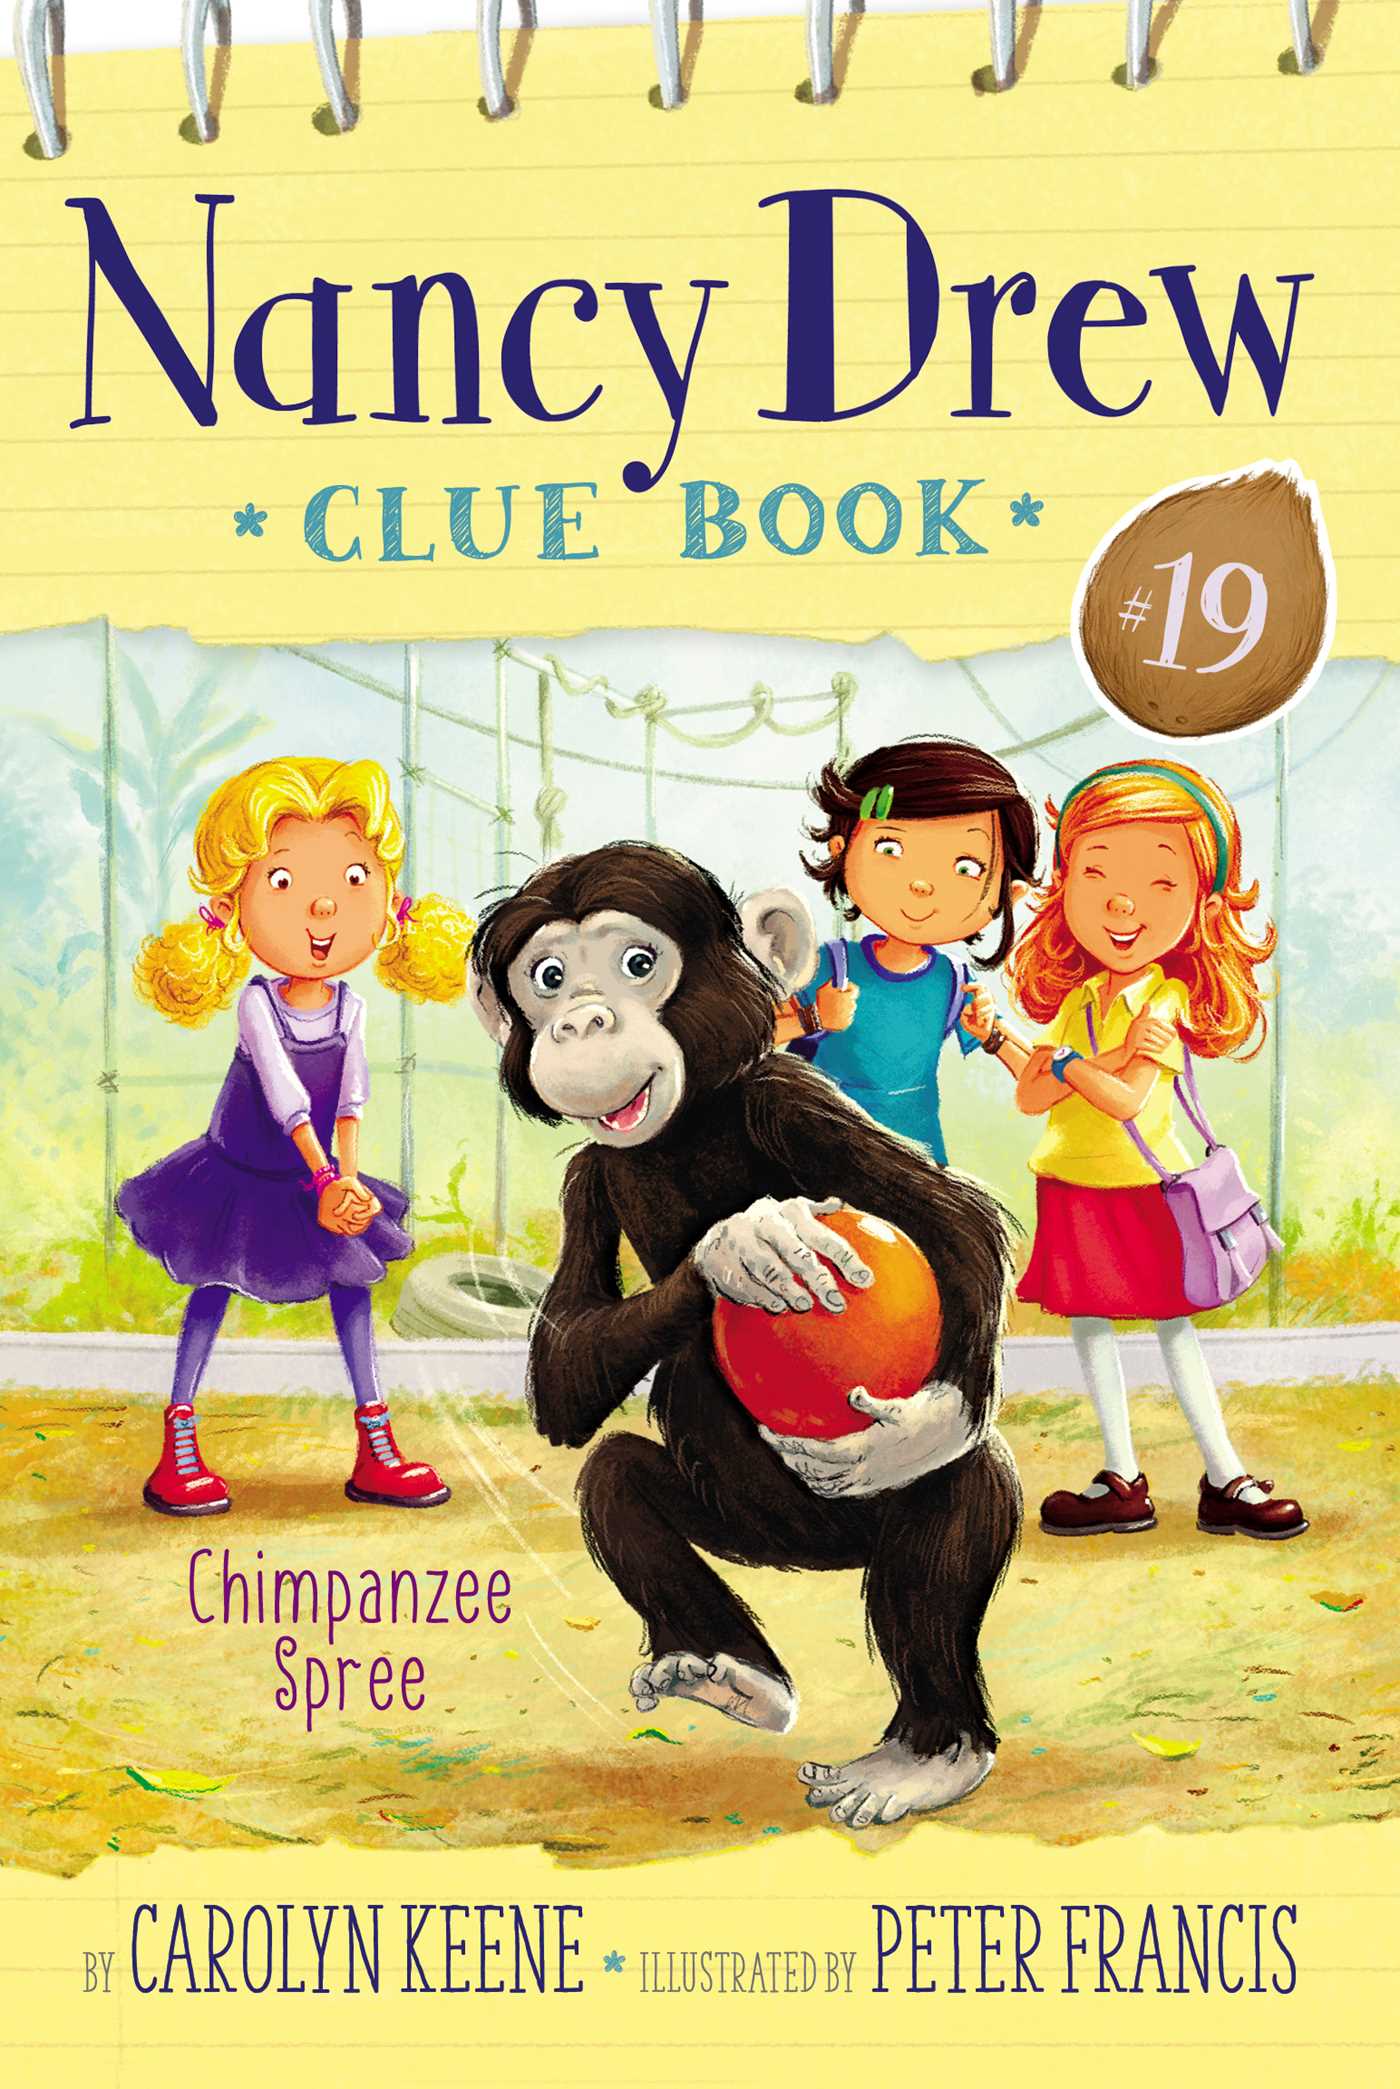 Chimpanzee Spree